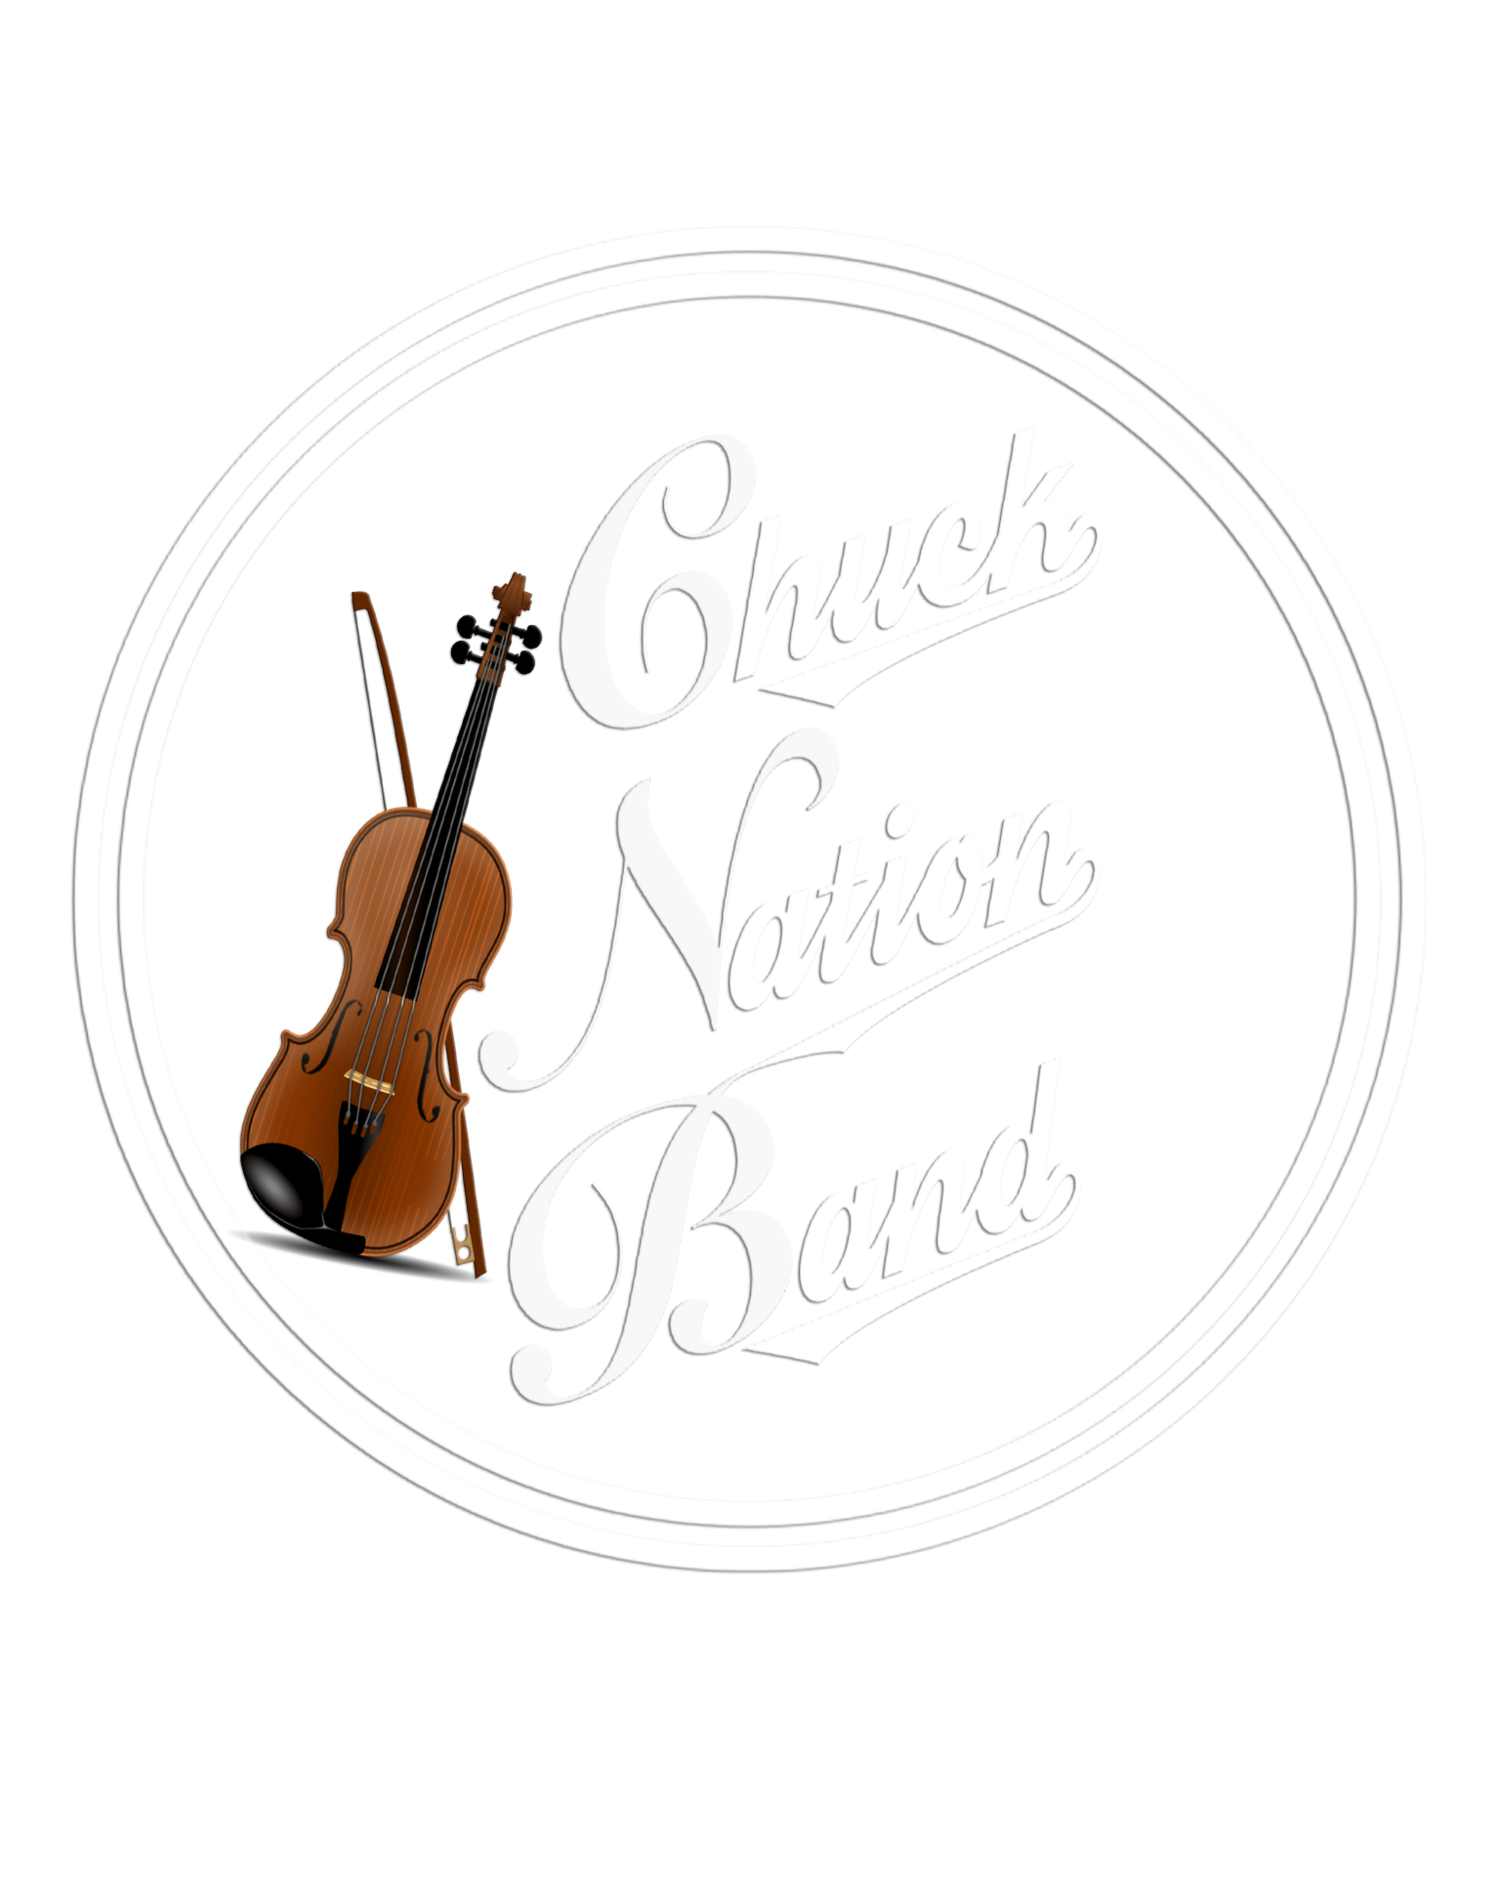 Chuck Nation Band